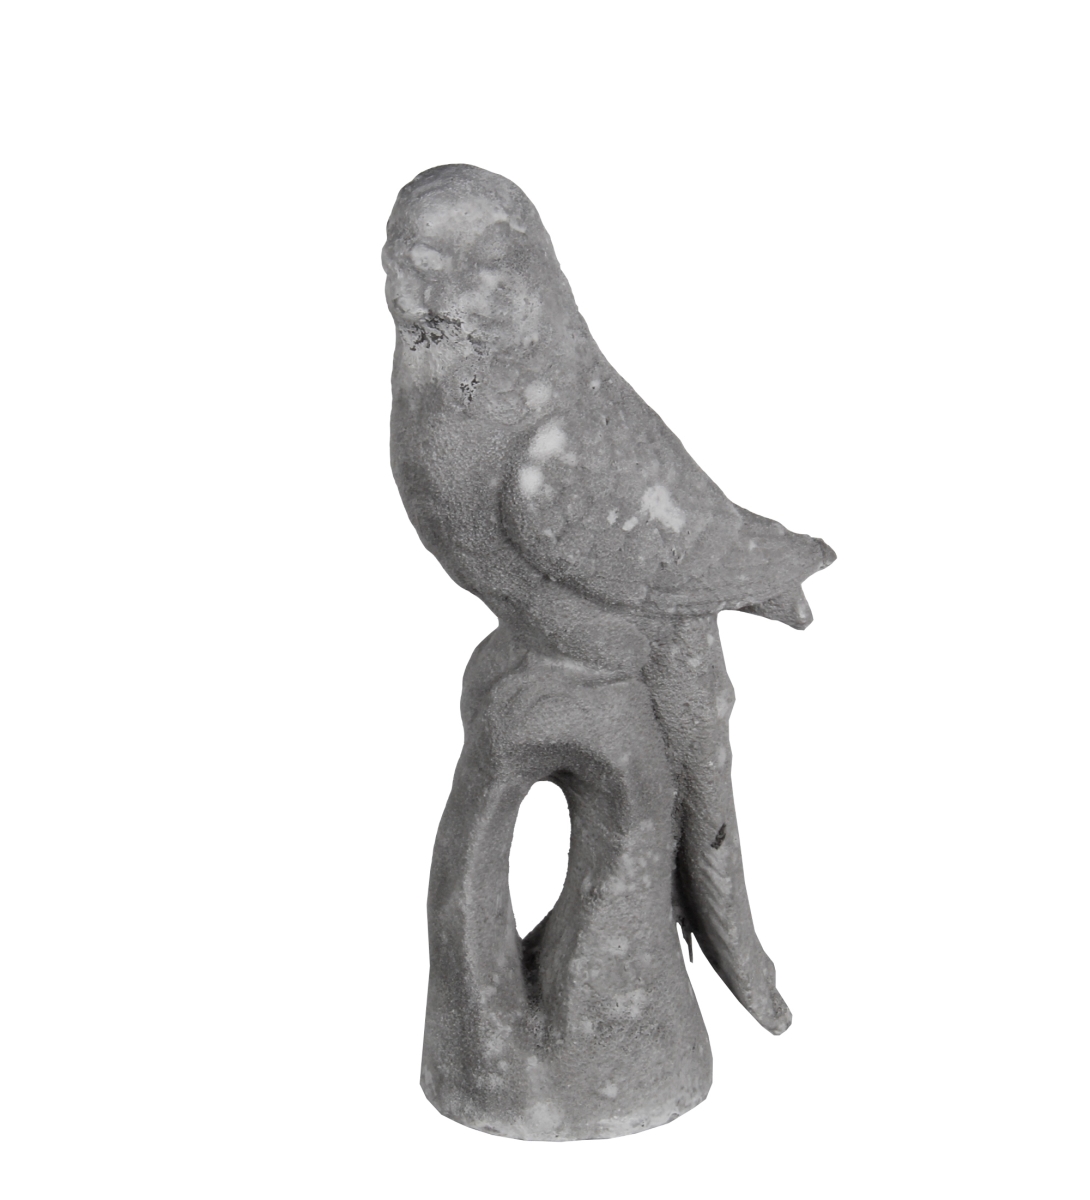 66985 7.5 X 5 X 16 In. Ceramic Parrot Statue In Stone